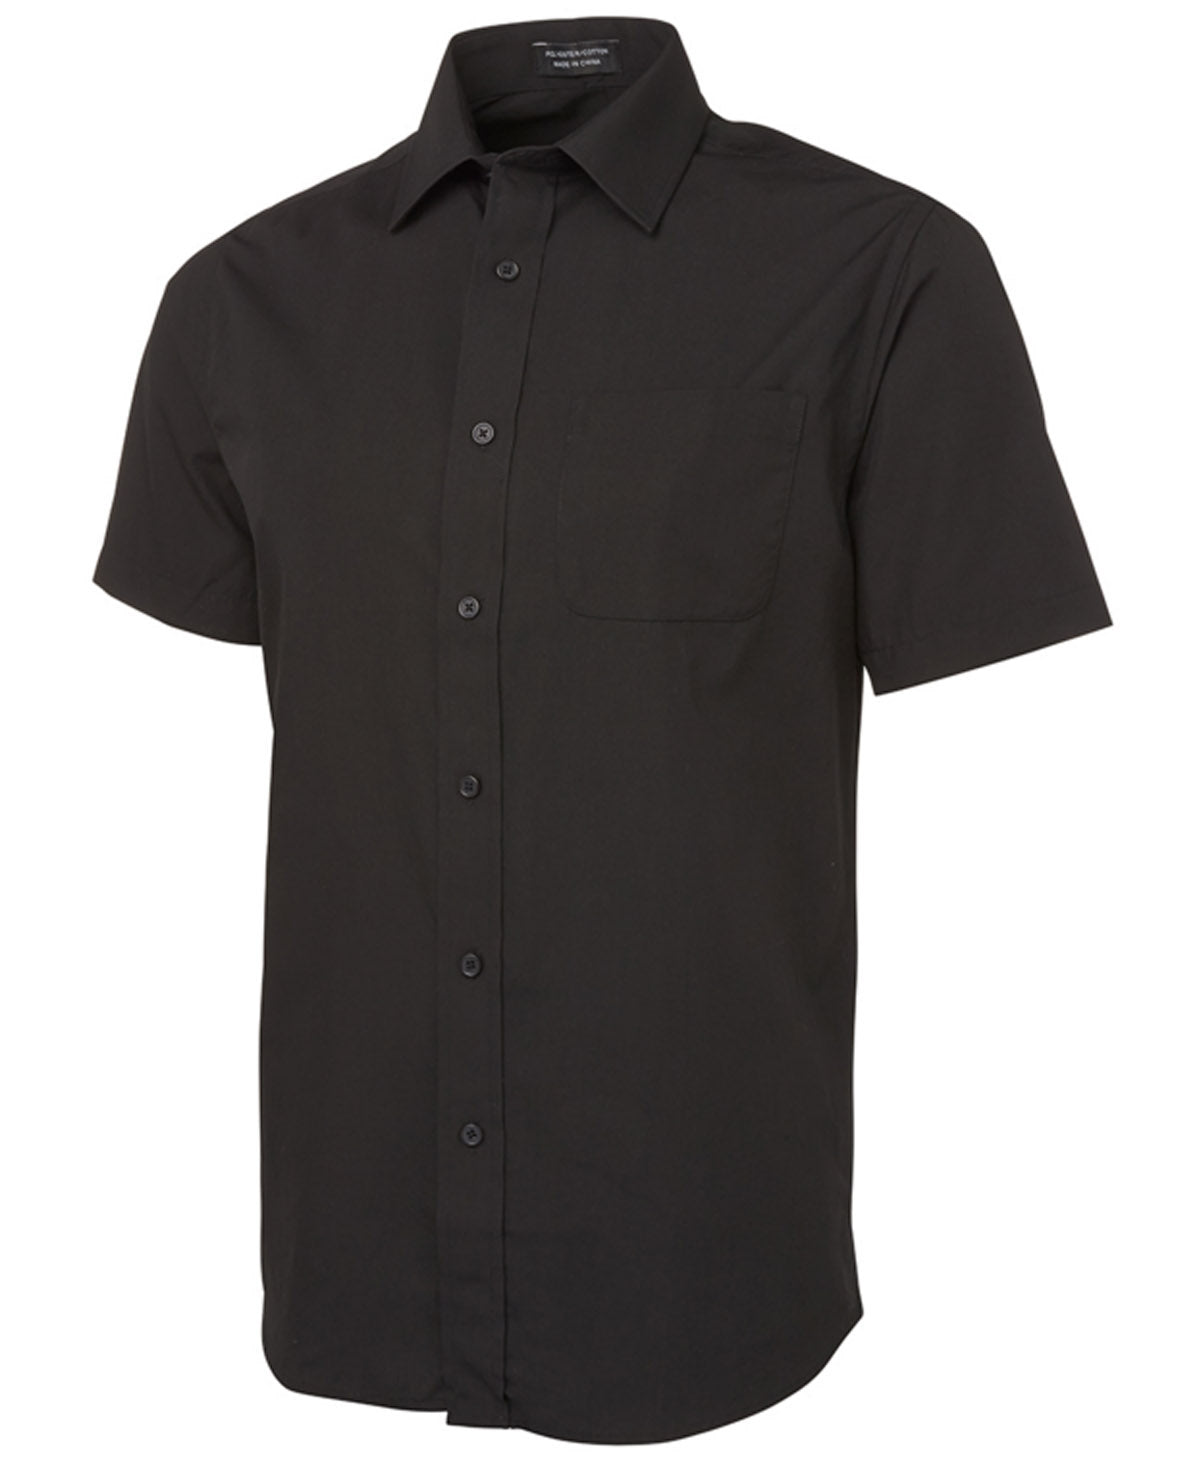 JBs Classic Poplin Short Sleeve Shirt Menswear Fashion - Mature by JBs Wear | The Bloke Shop